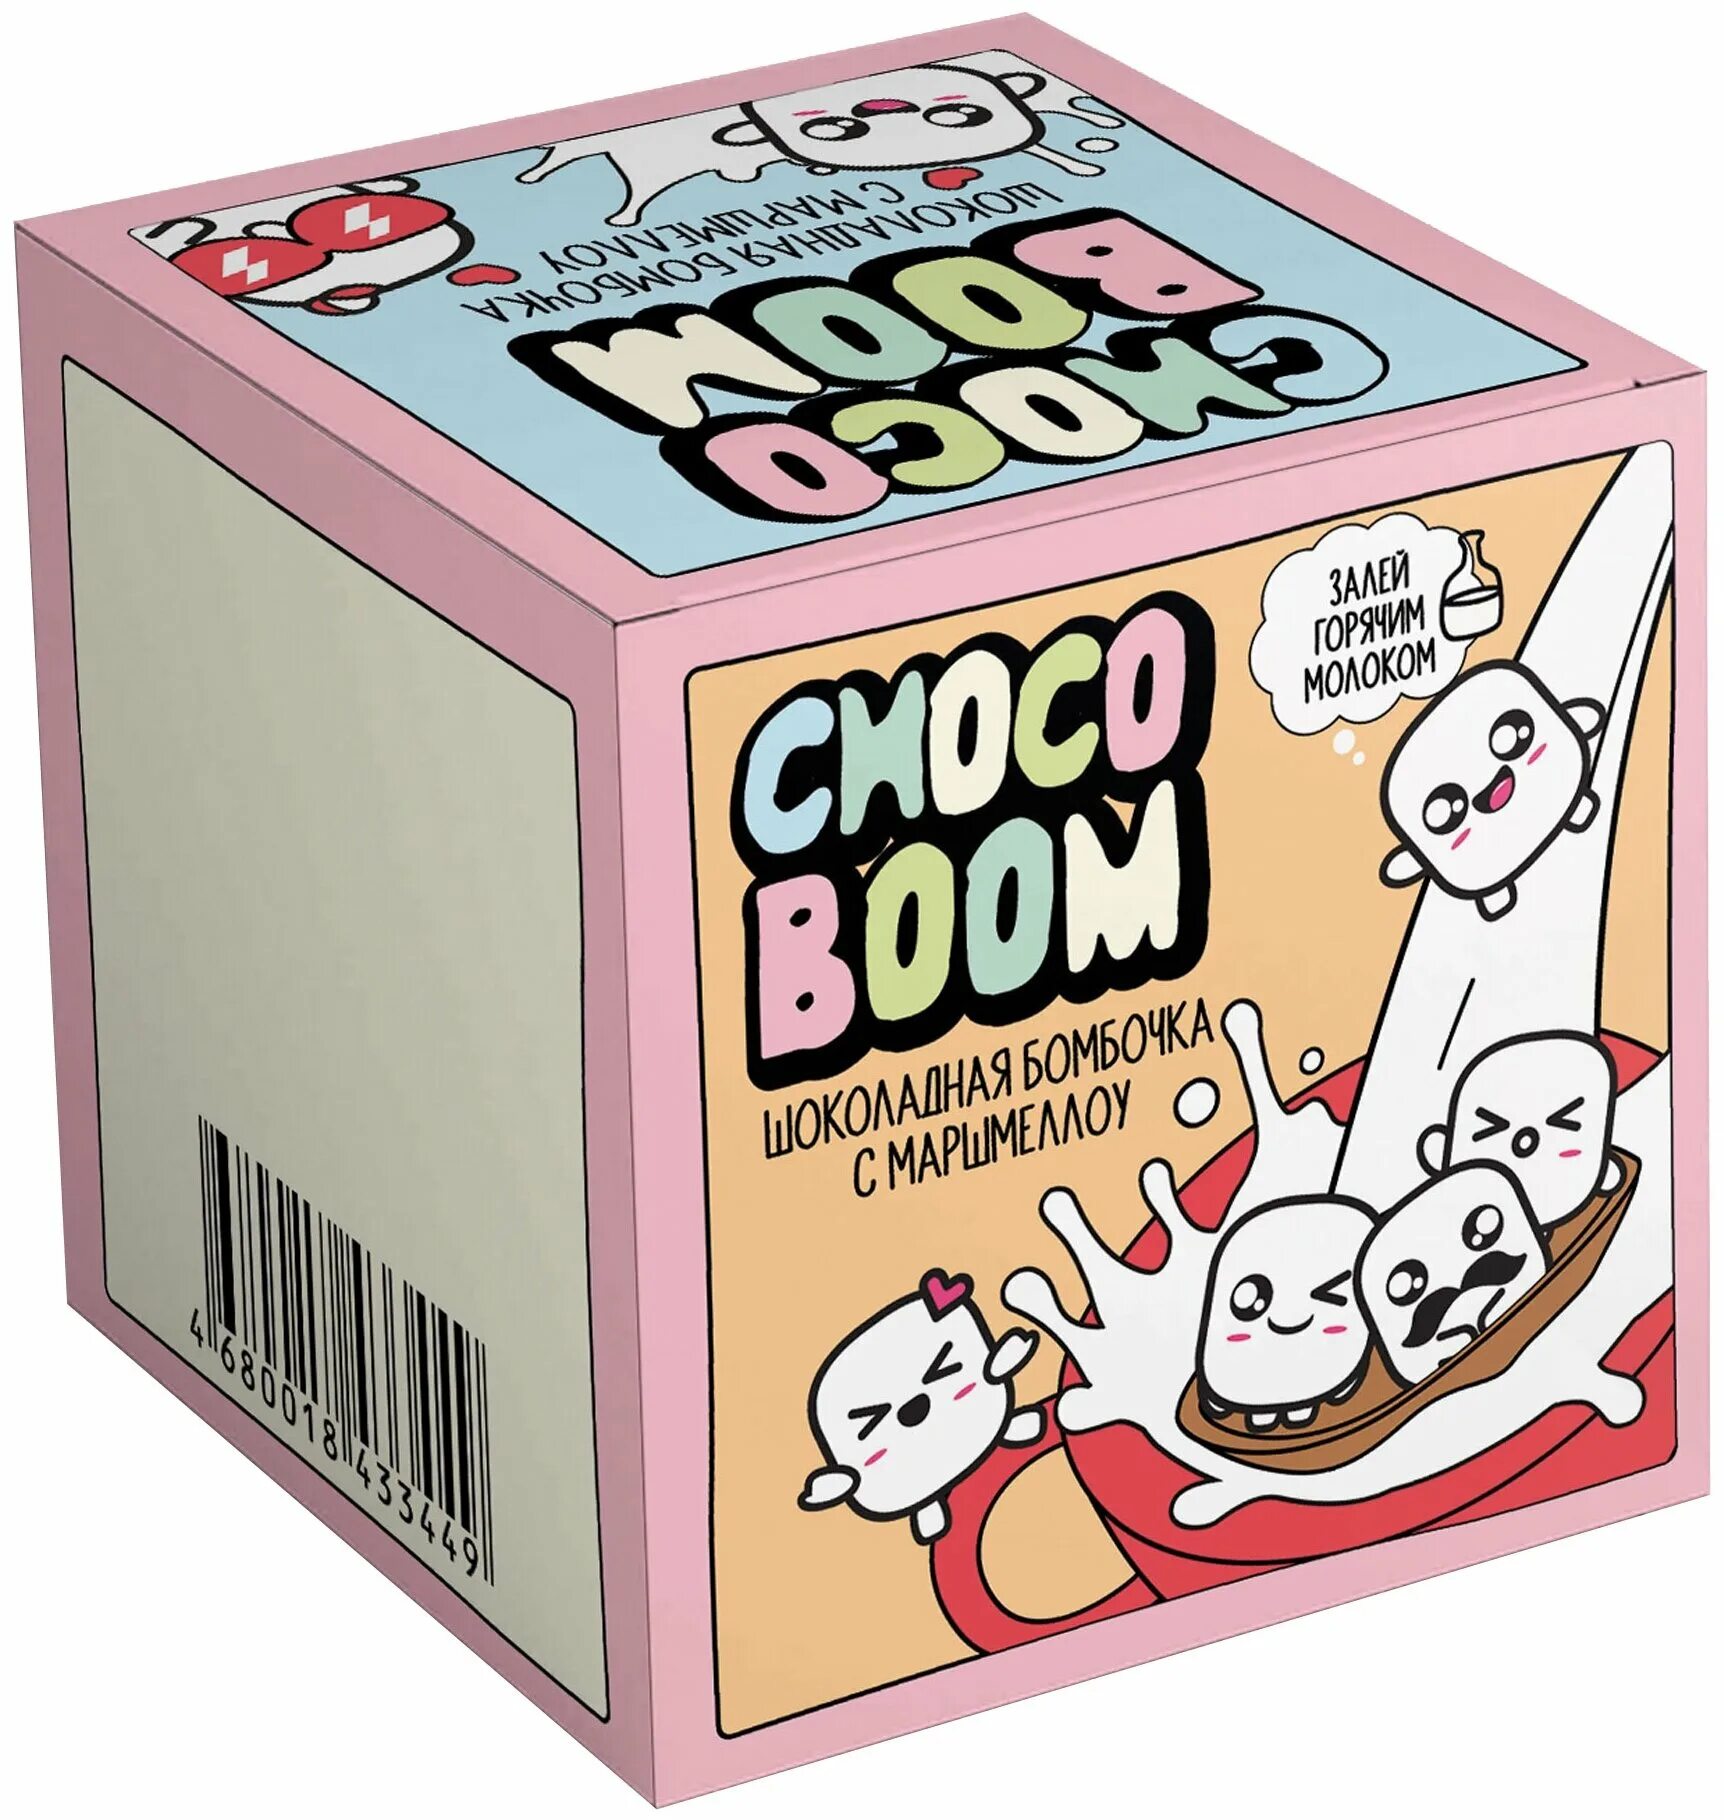 Choco boom. ШОКОБУМ. Шар Choco Boom Конфитрейд. Чоко бум шоколадный шар с Marshmallow 28 грамм. Choco Boom шоколадный шар с маршмеллоу.